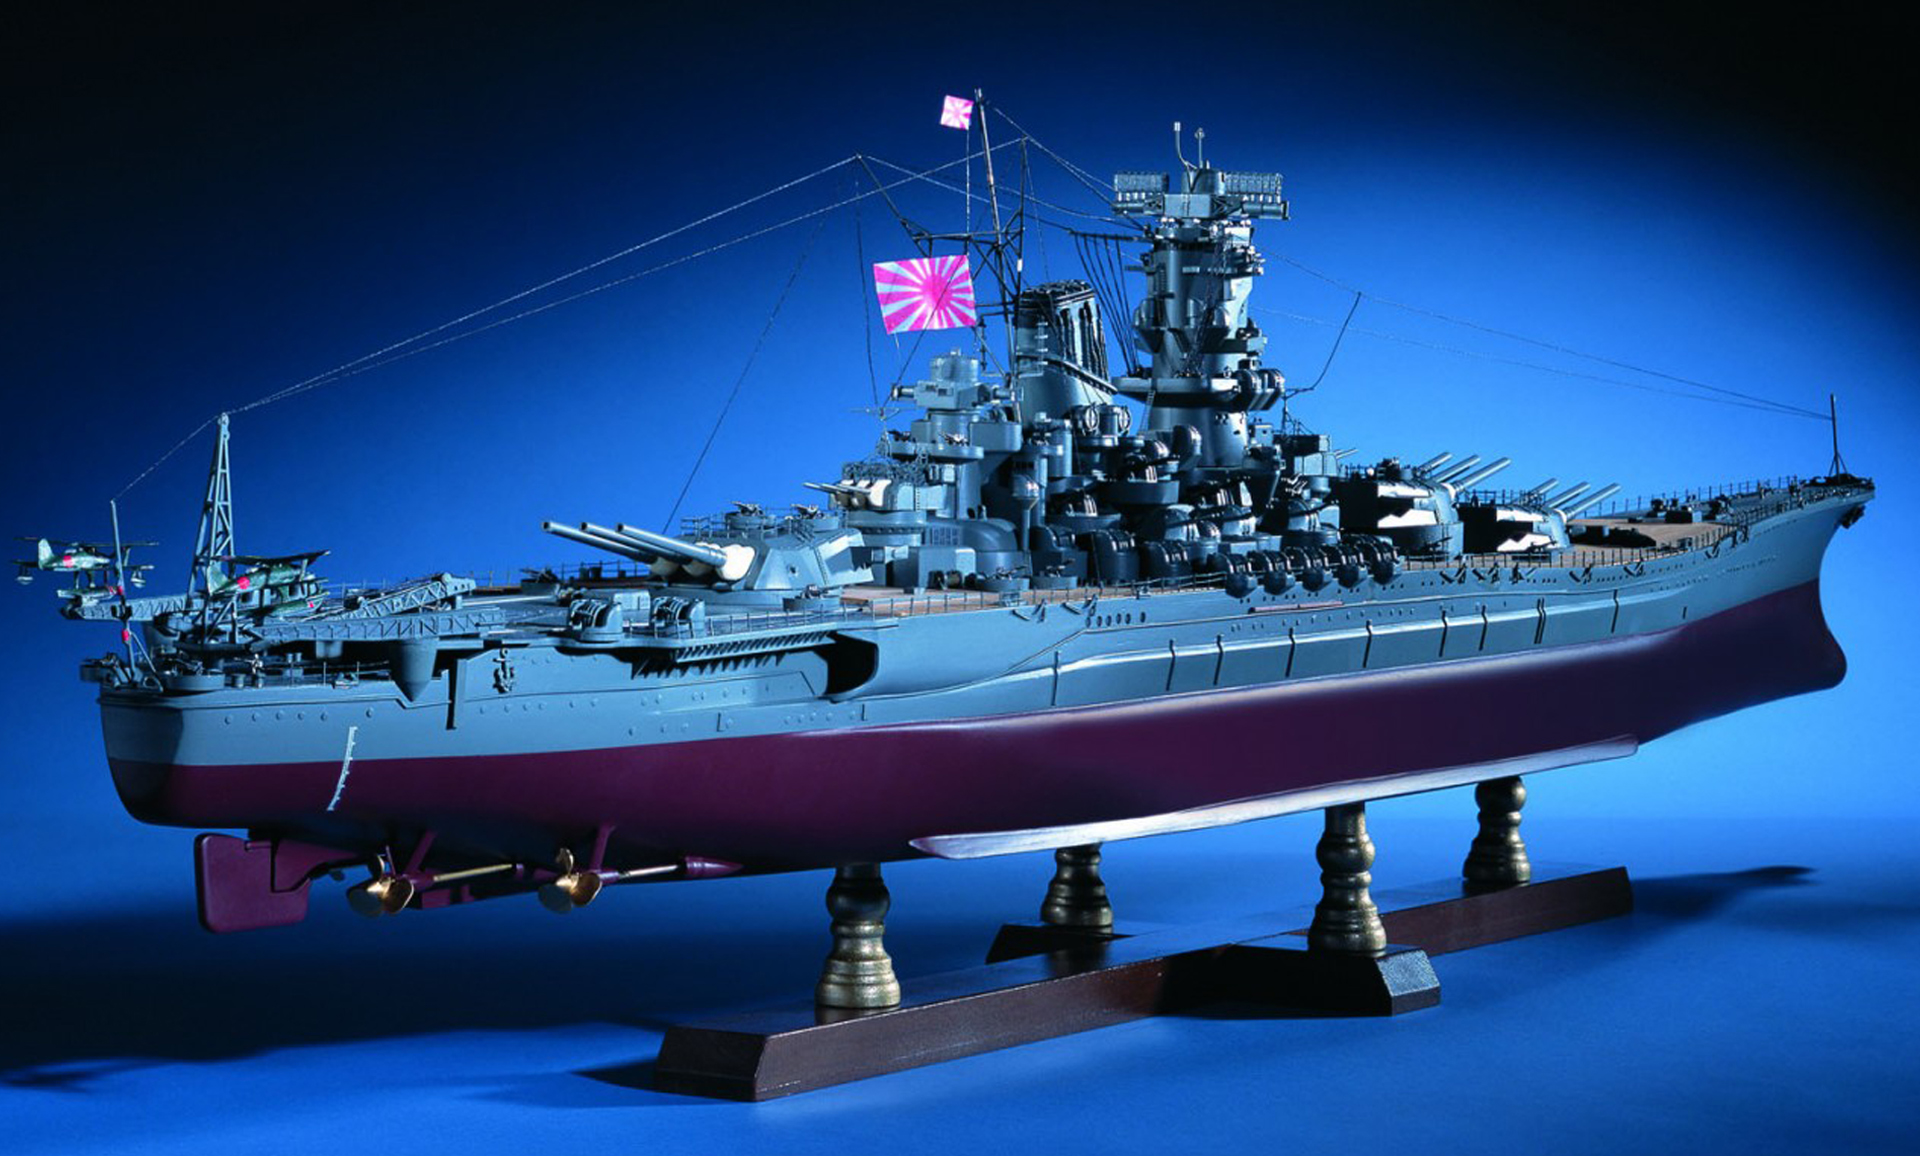 Yamato battleship